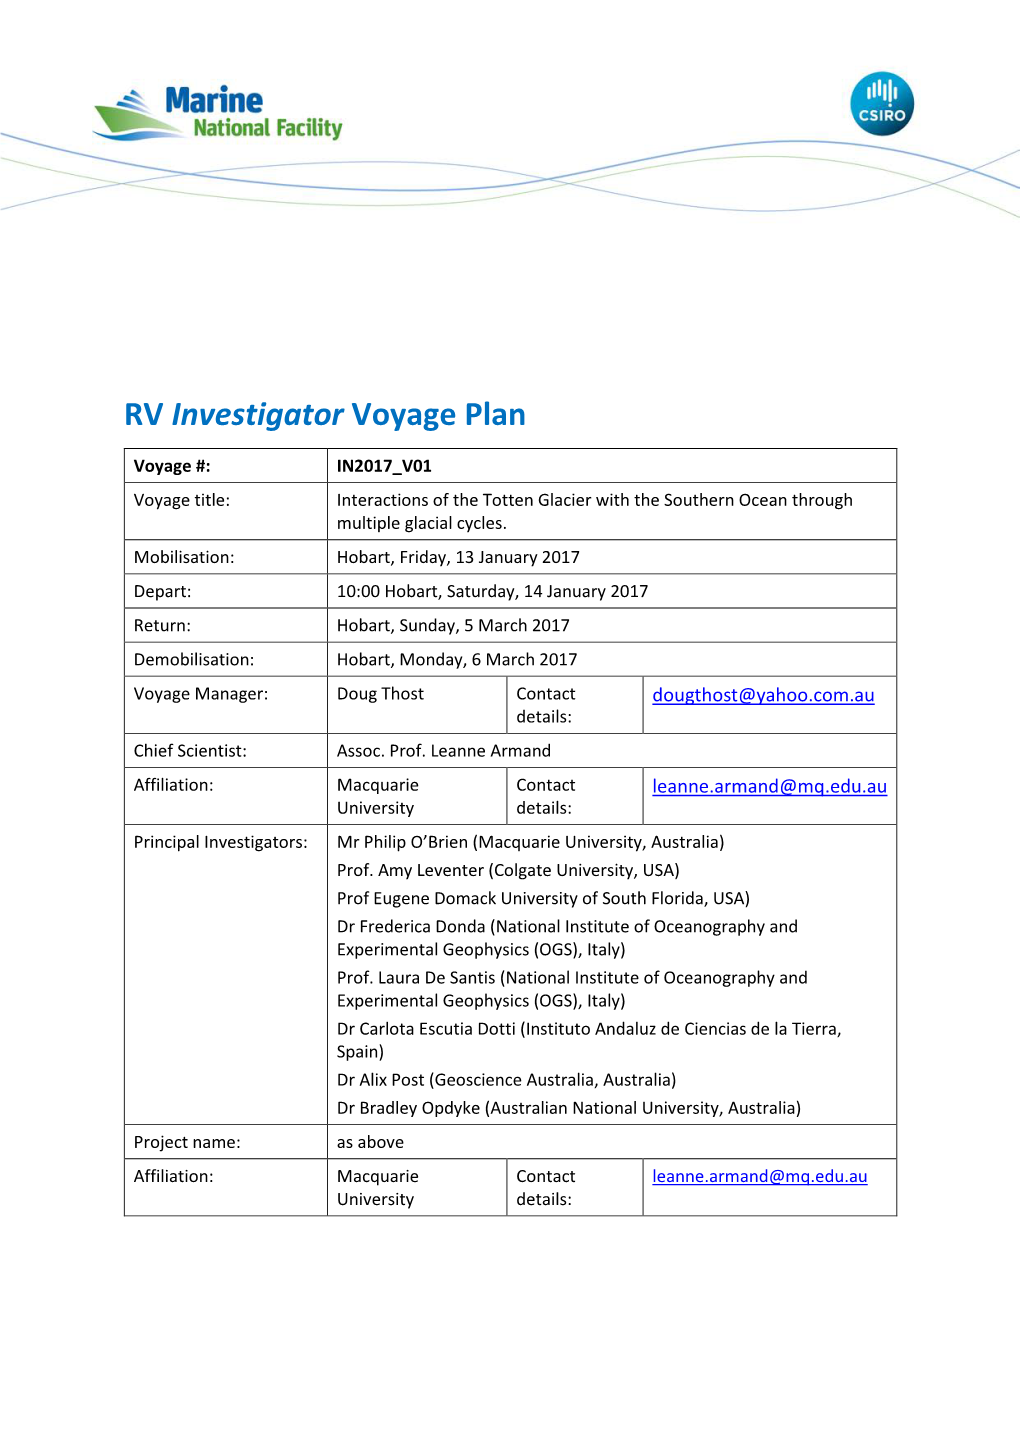 IN2017 V01 Voyage Plan